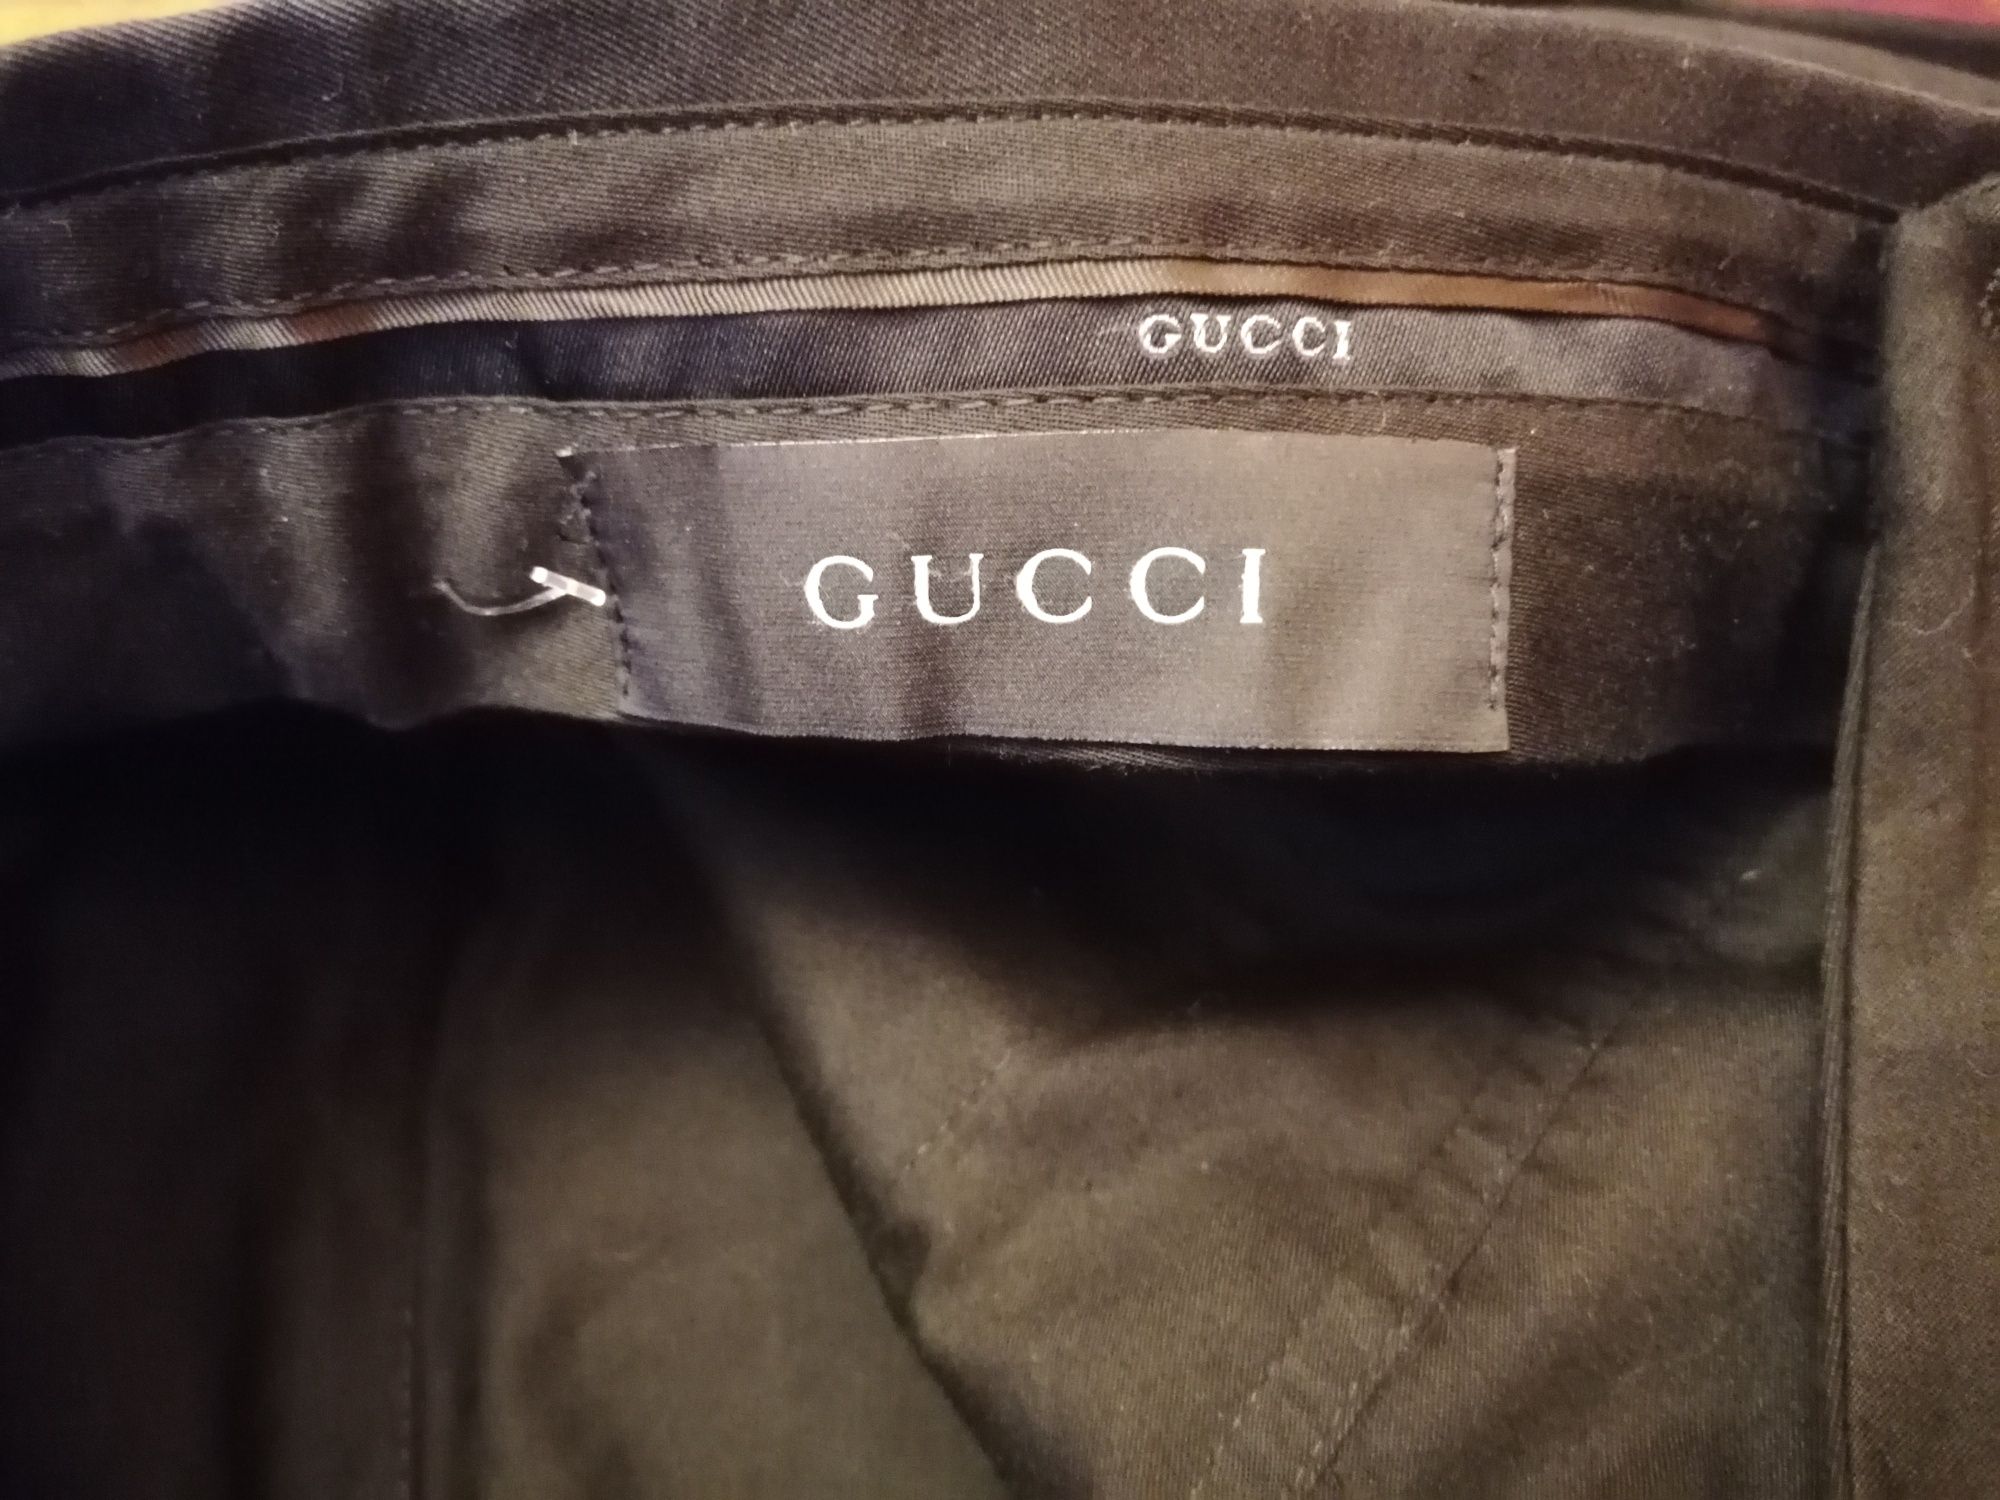 Spodnie Gucci, materiał oryginał.